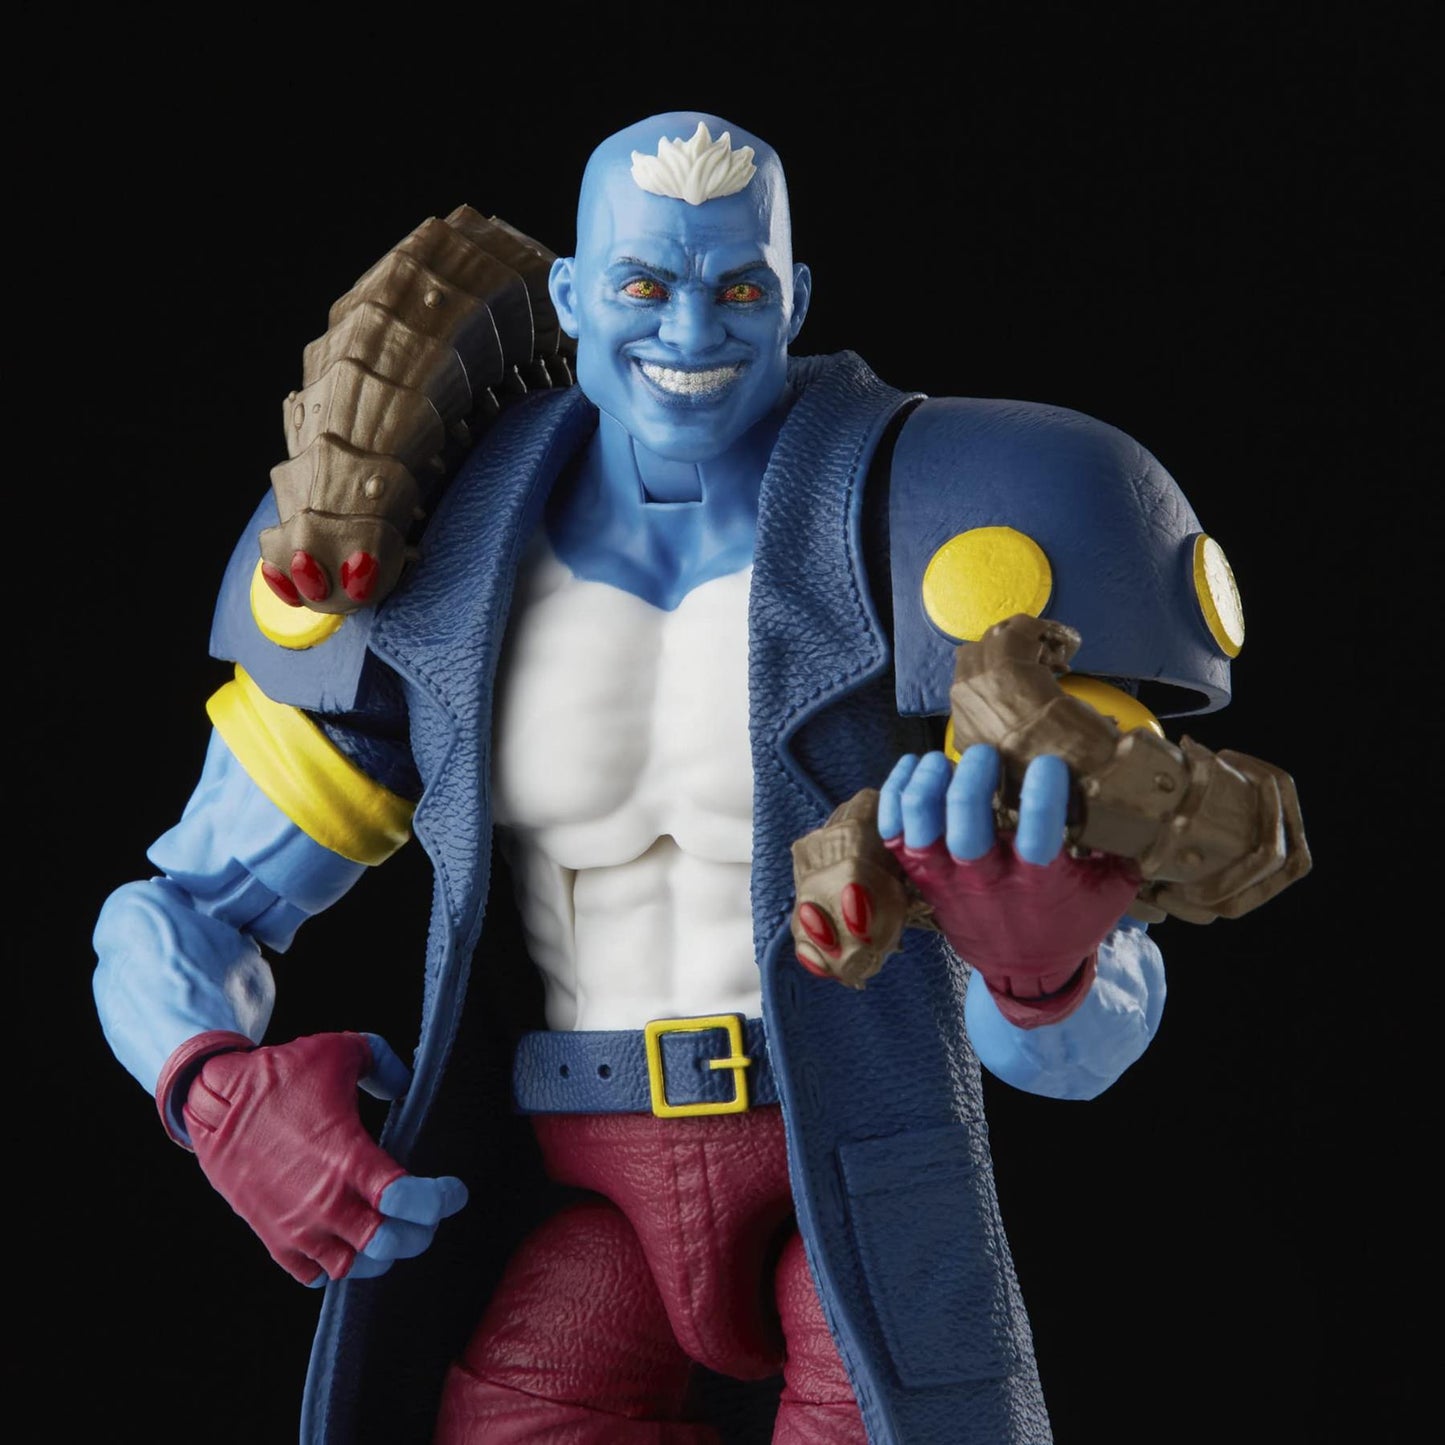 MAGGOTT X-Men Action Figure Build-A-Figure F3691 Marvel Toys Legends Series